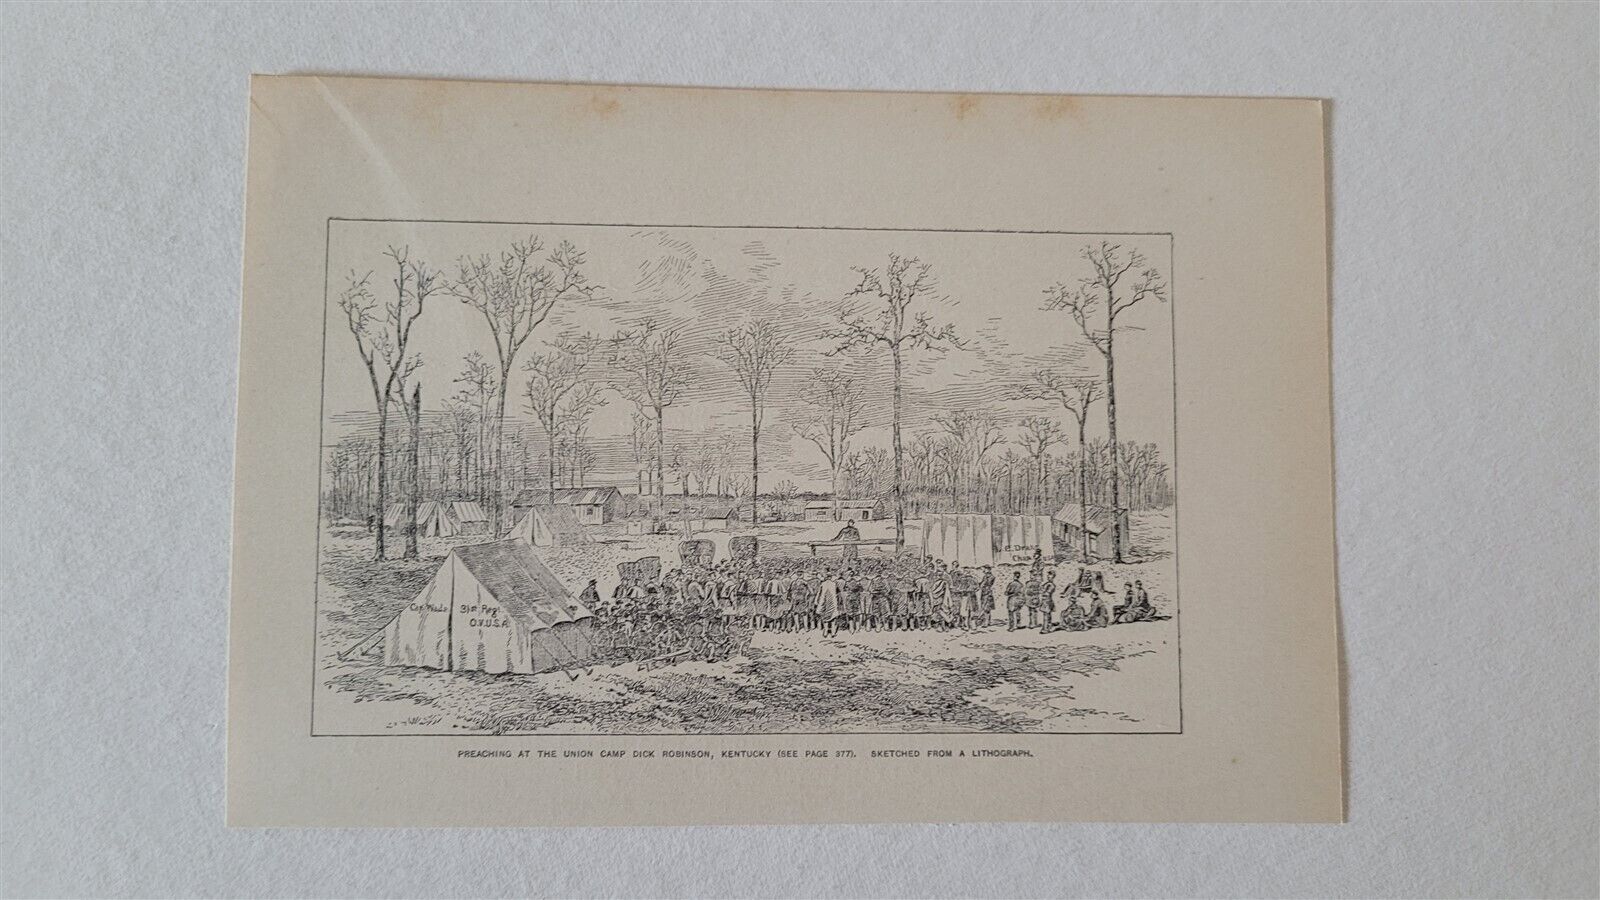 Camp Dick Robinson Kentucky Union Camp Preaching 1888 Civil War Picture